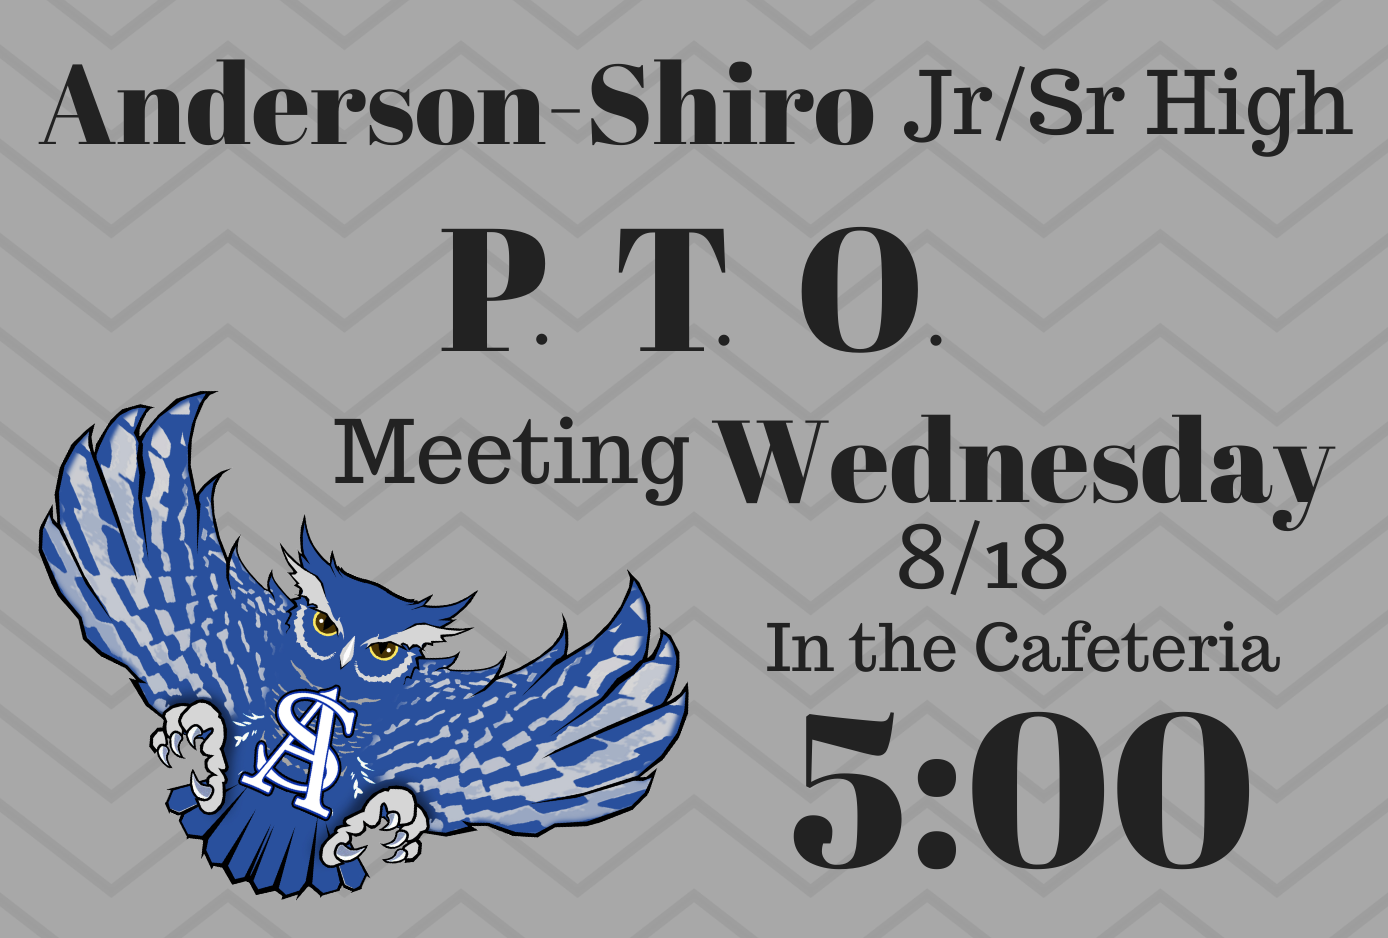 PTO Meeting Flyer